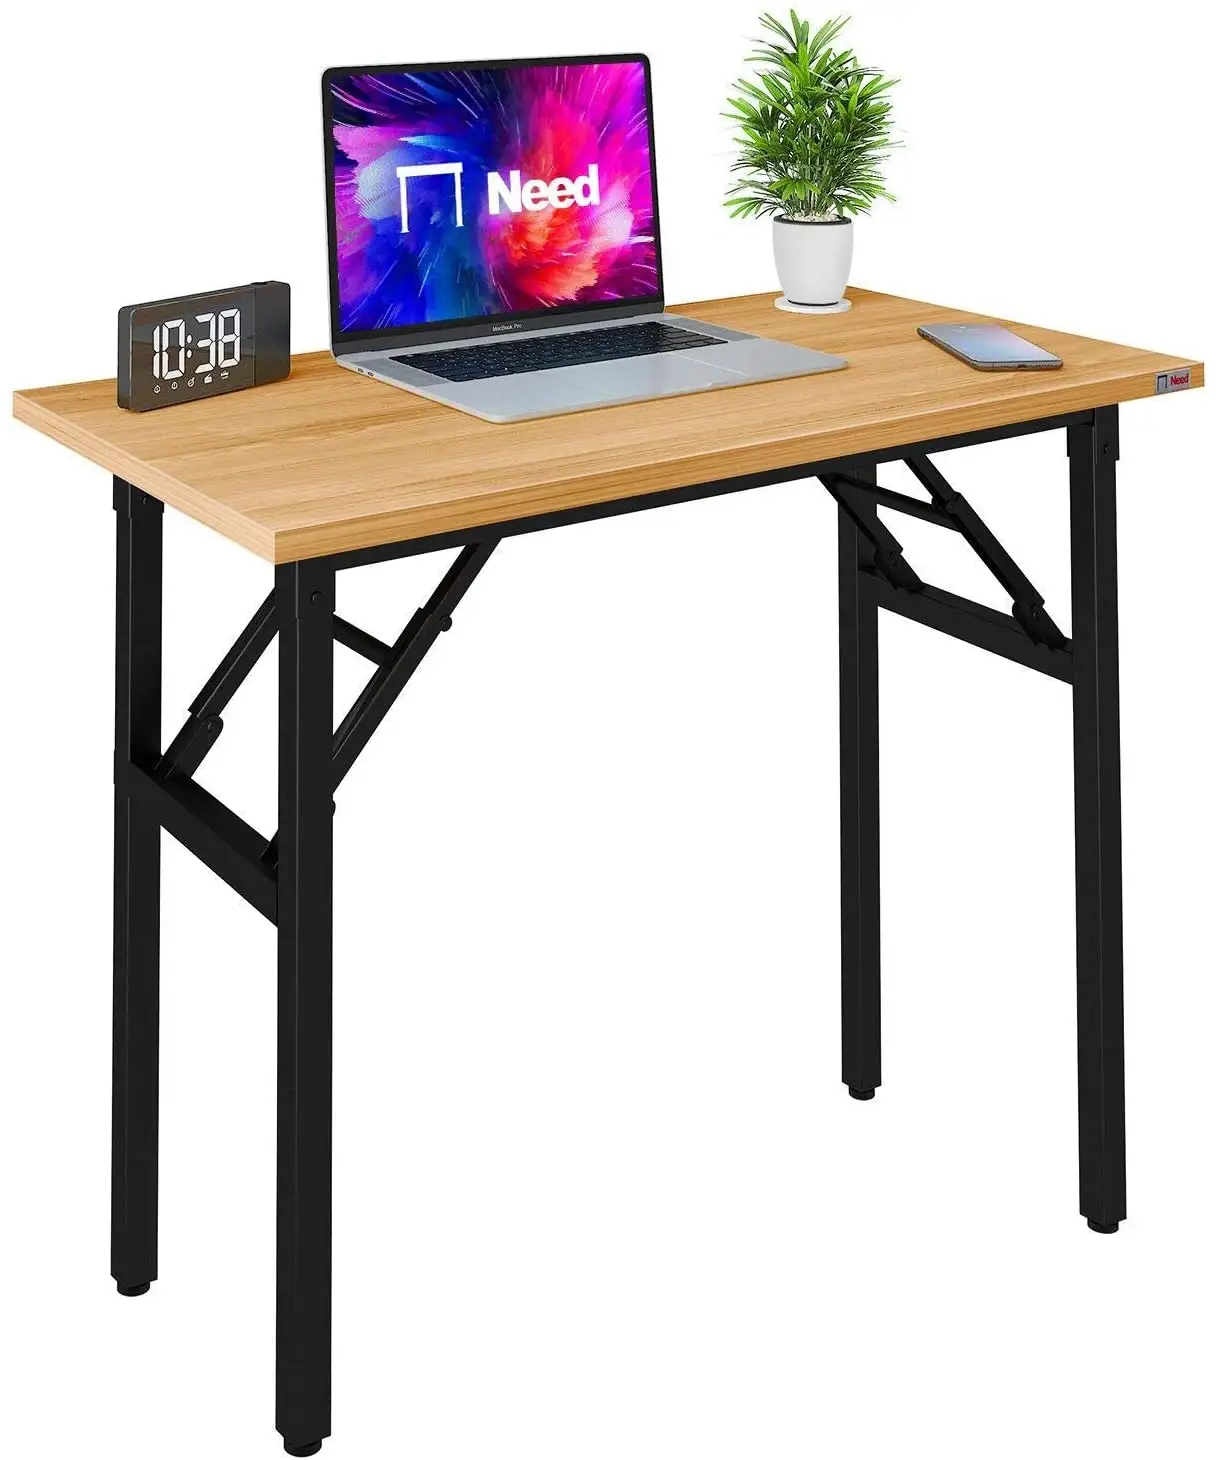 Hete Verkoop Hoge Kwaliteit Opvouwbare Kantoorkantoormeubilair, Eenvoudige Draagbare Computer Laptop Tafel